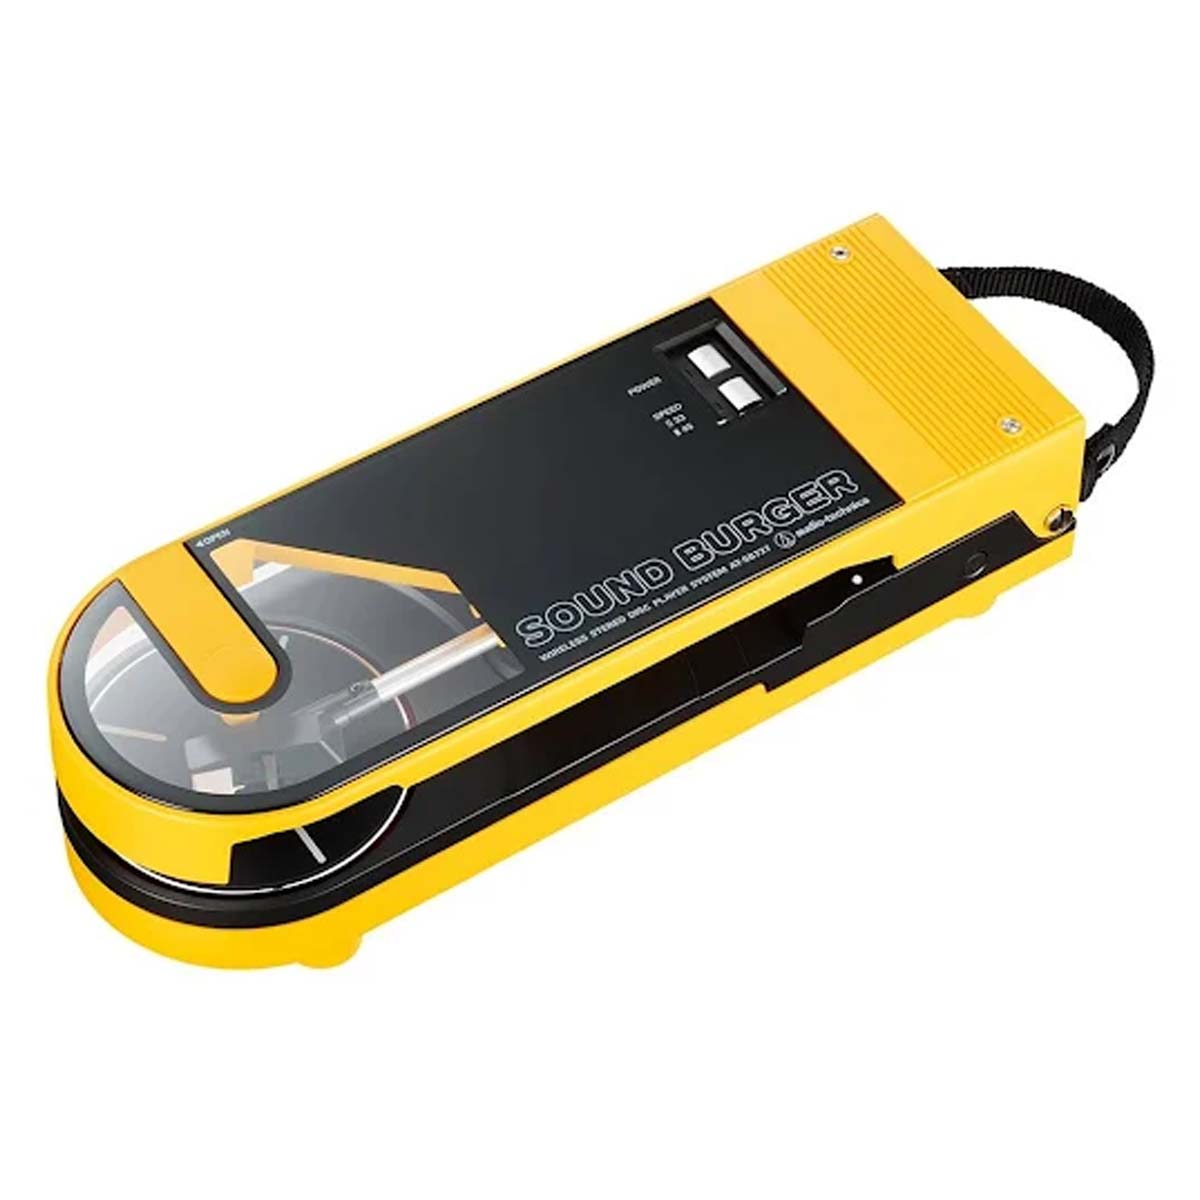 Audio Technica SB727 SOUND BURGER Portable Bluetooth Turntable -Yellow